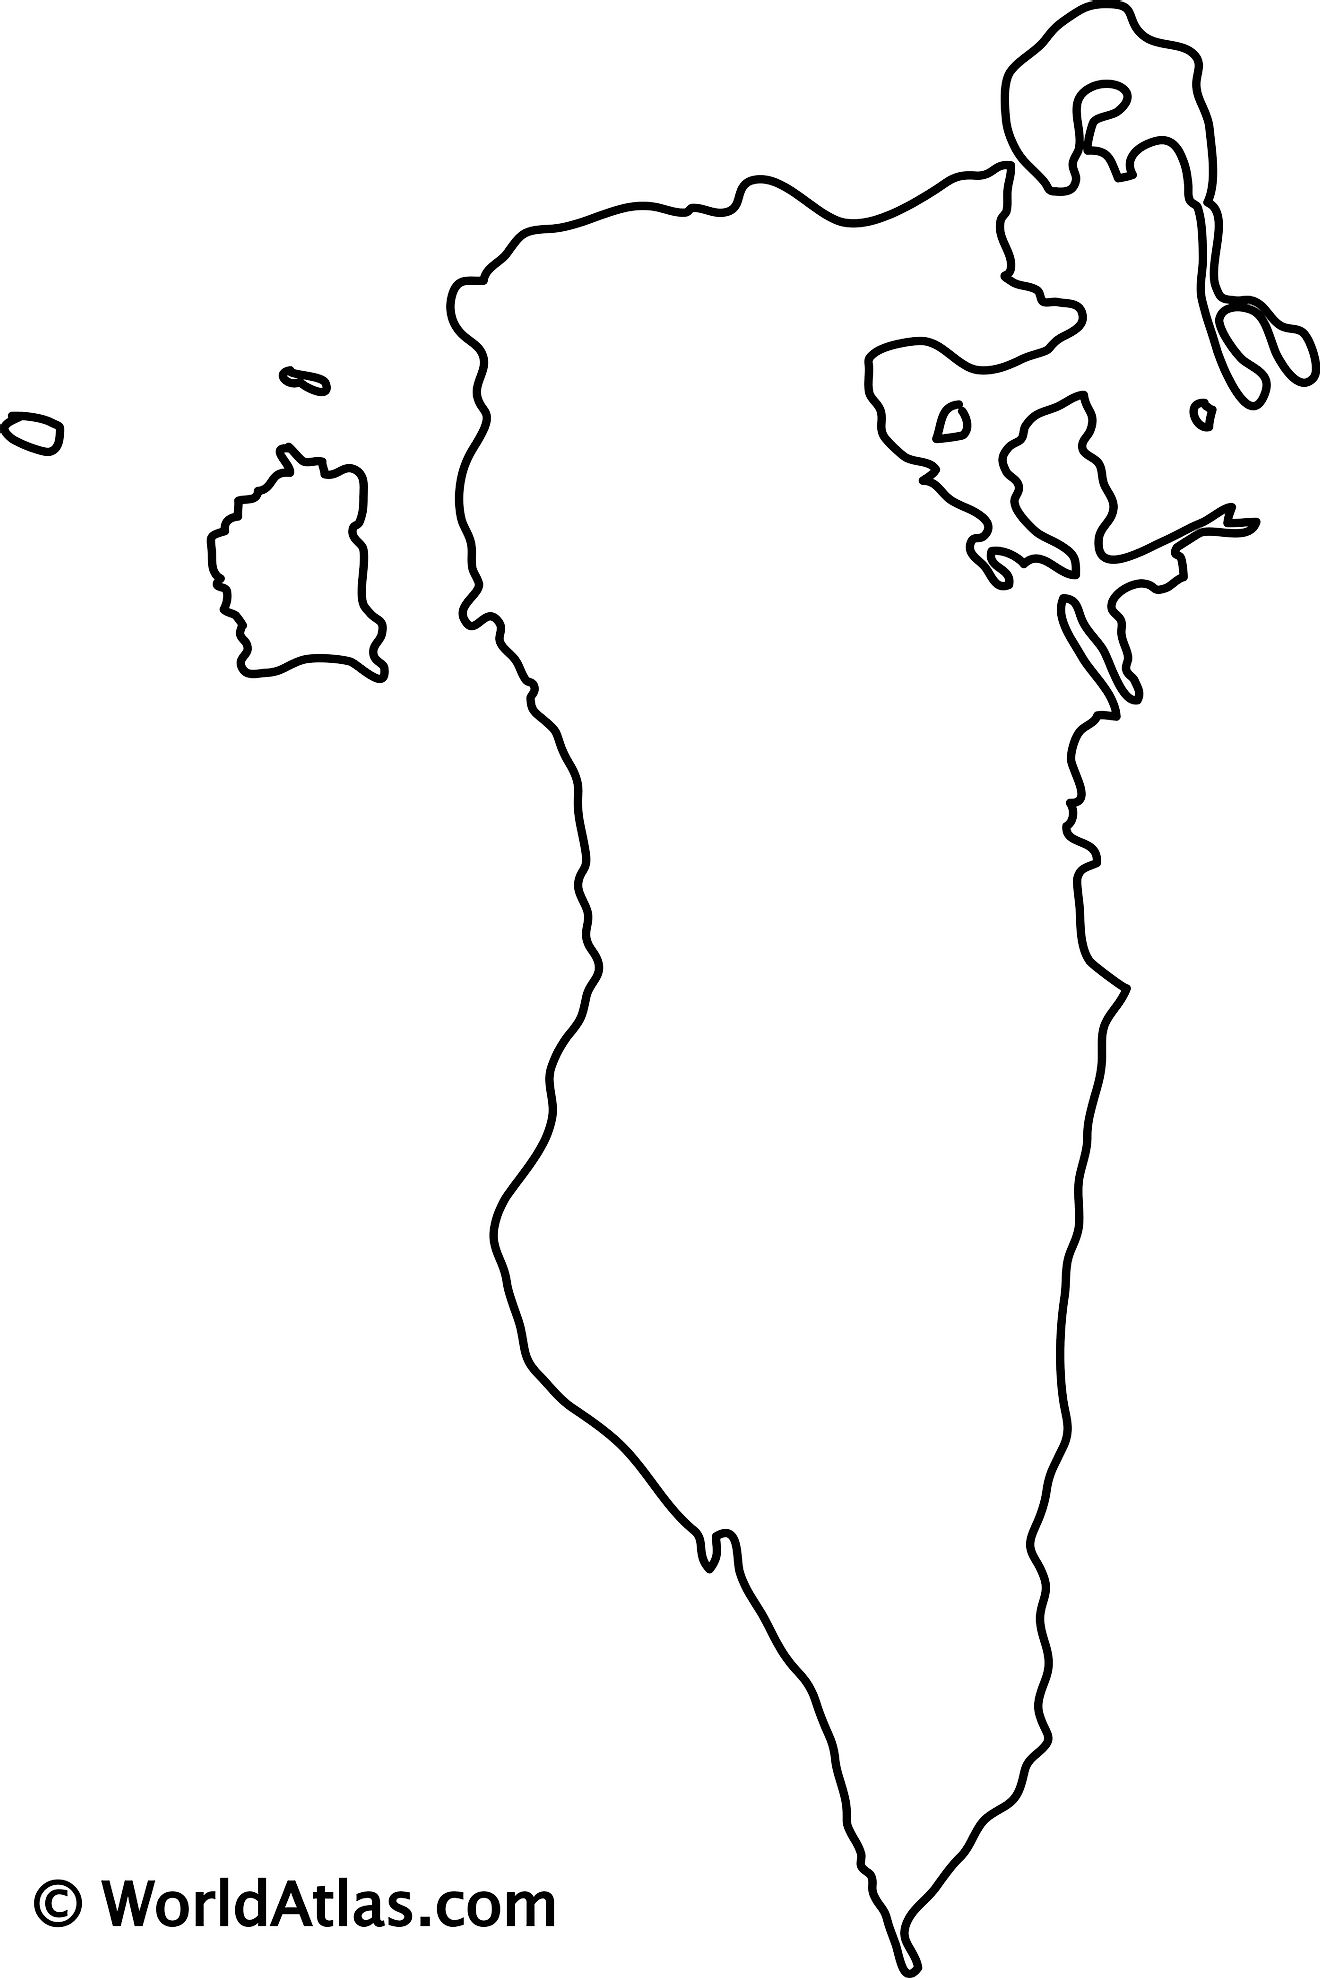 Blank Outline Map of Bahrain